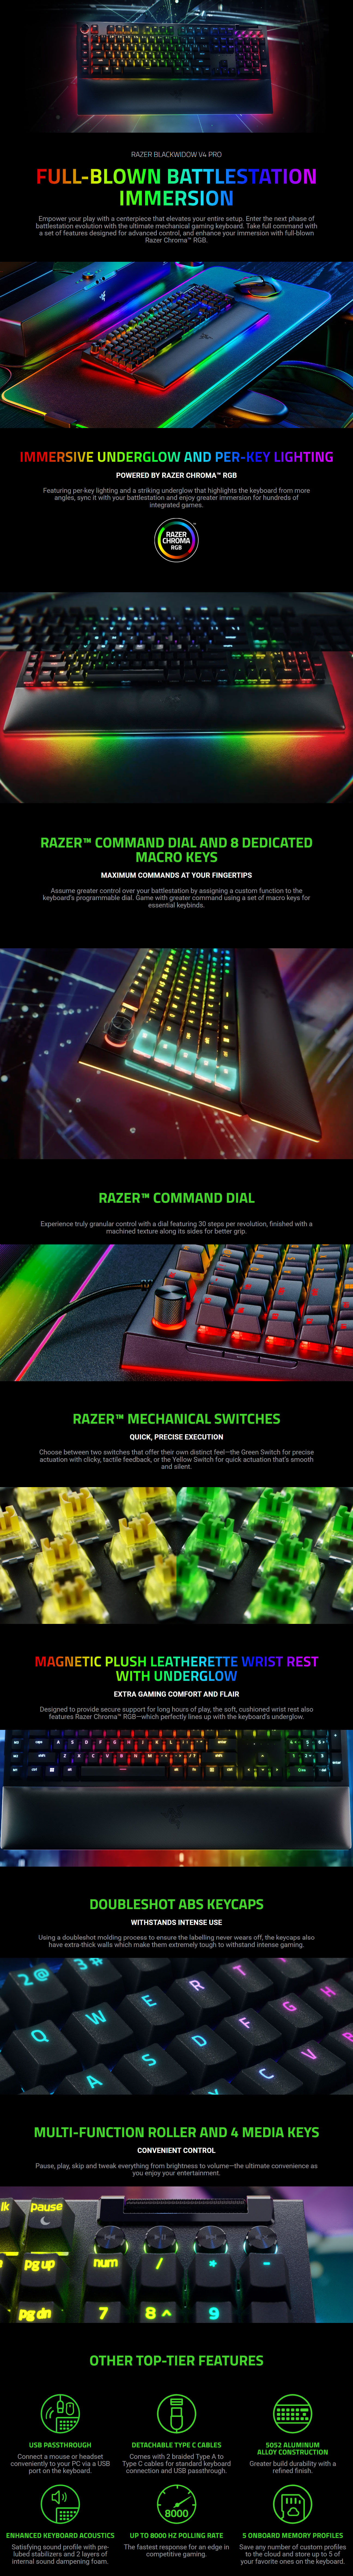 Keyboards-Razer-BlackWidow-V4-Pro-Mechanical-Gaming-Keyboard-Green-Switch-7